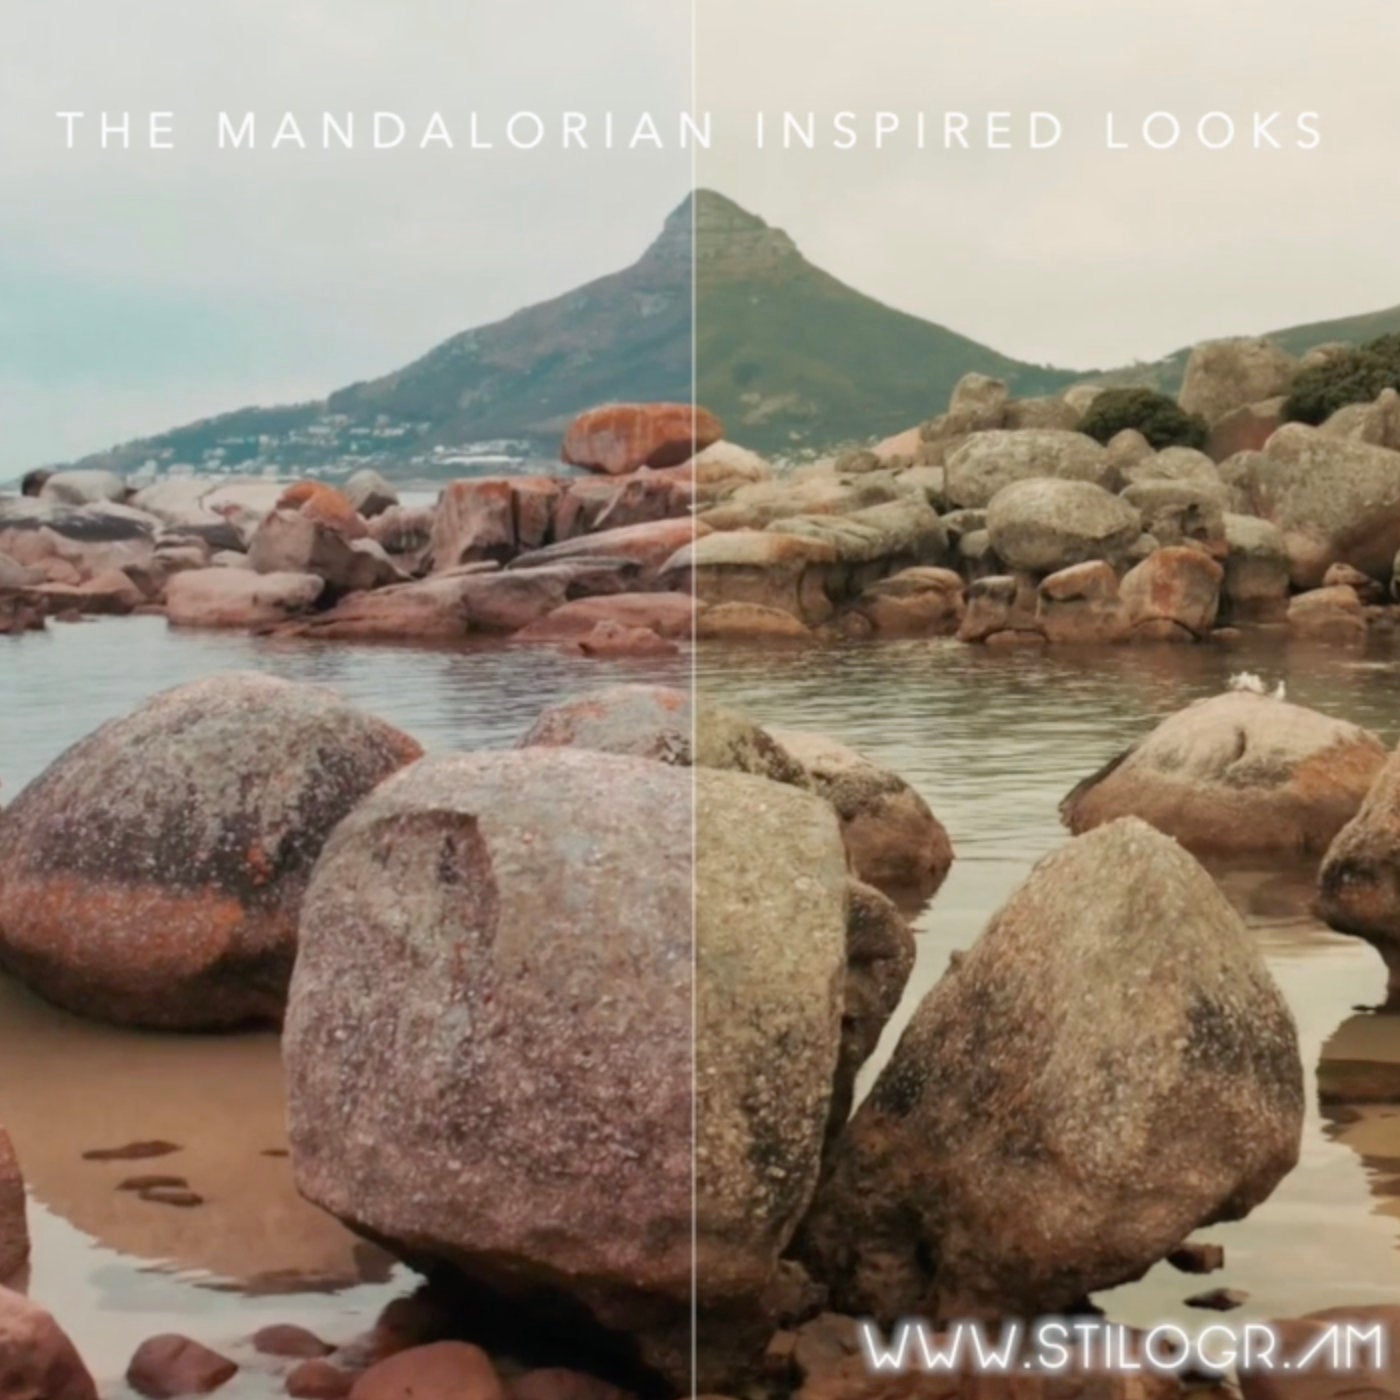 THE MANDALORIAN-inspired looks